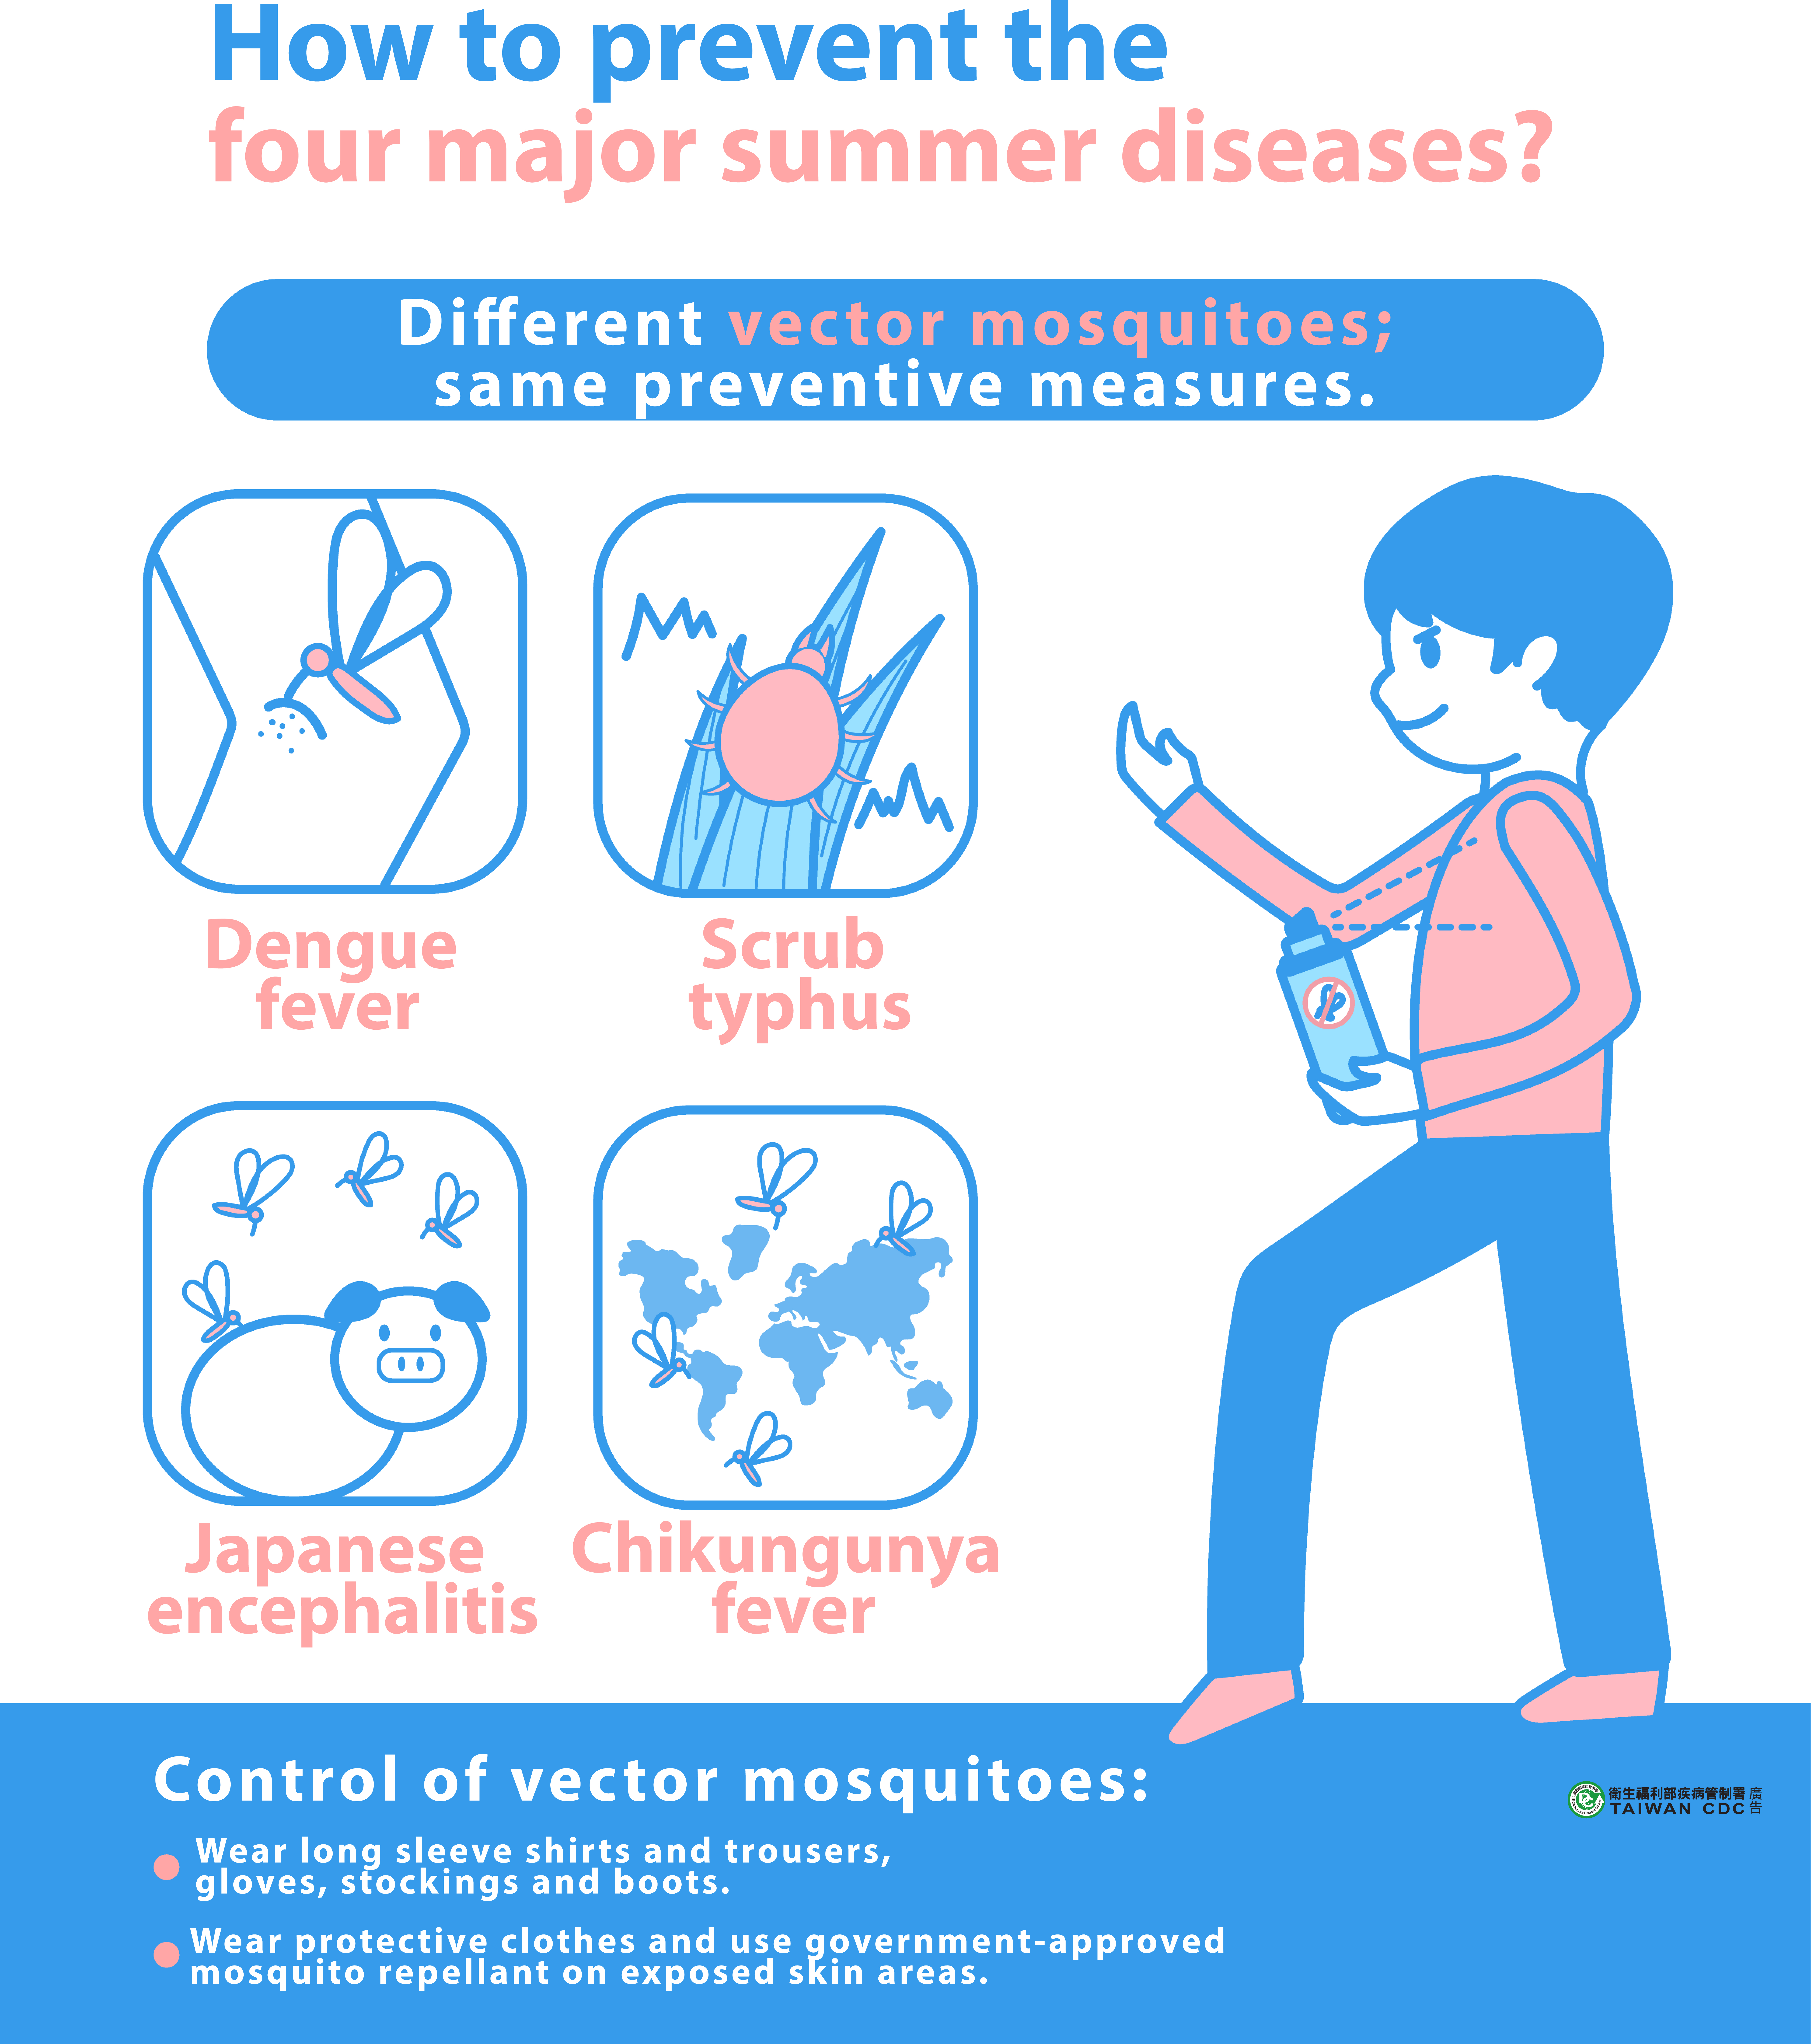 詳如附件【click me】How to prevent the four major summer diseases 對付夏日疾病四大天王（英文）.jpg